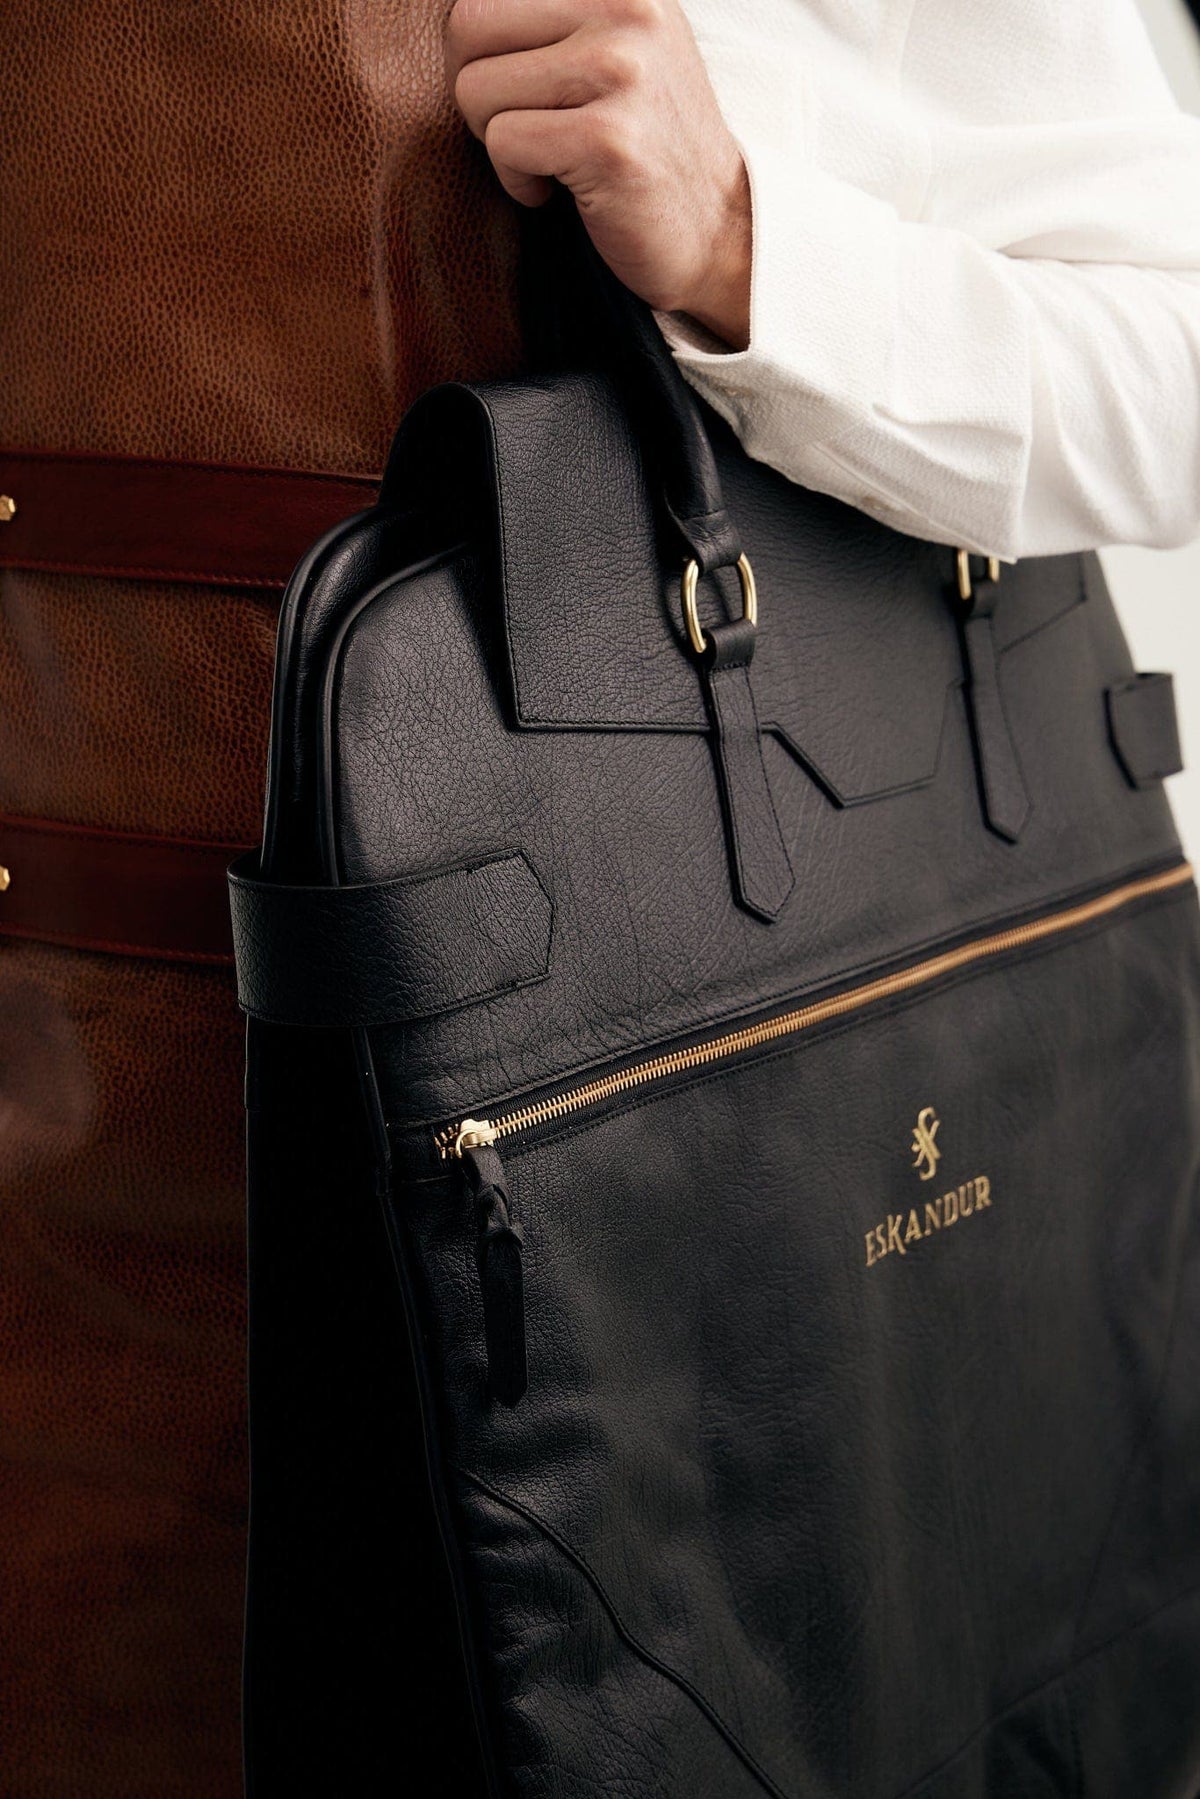 Eskandur luxury garment bag on shoulder  black leather 